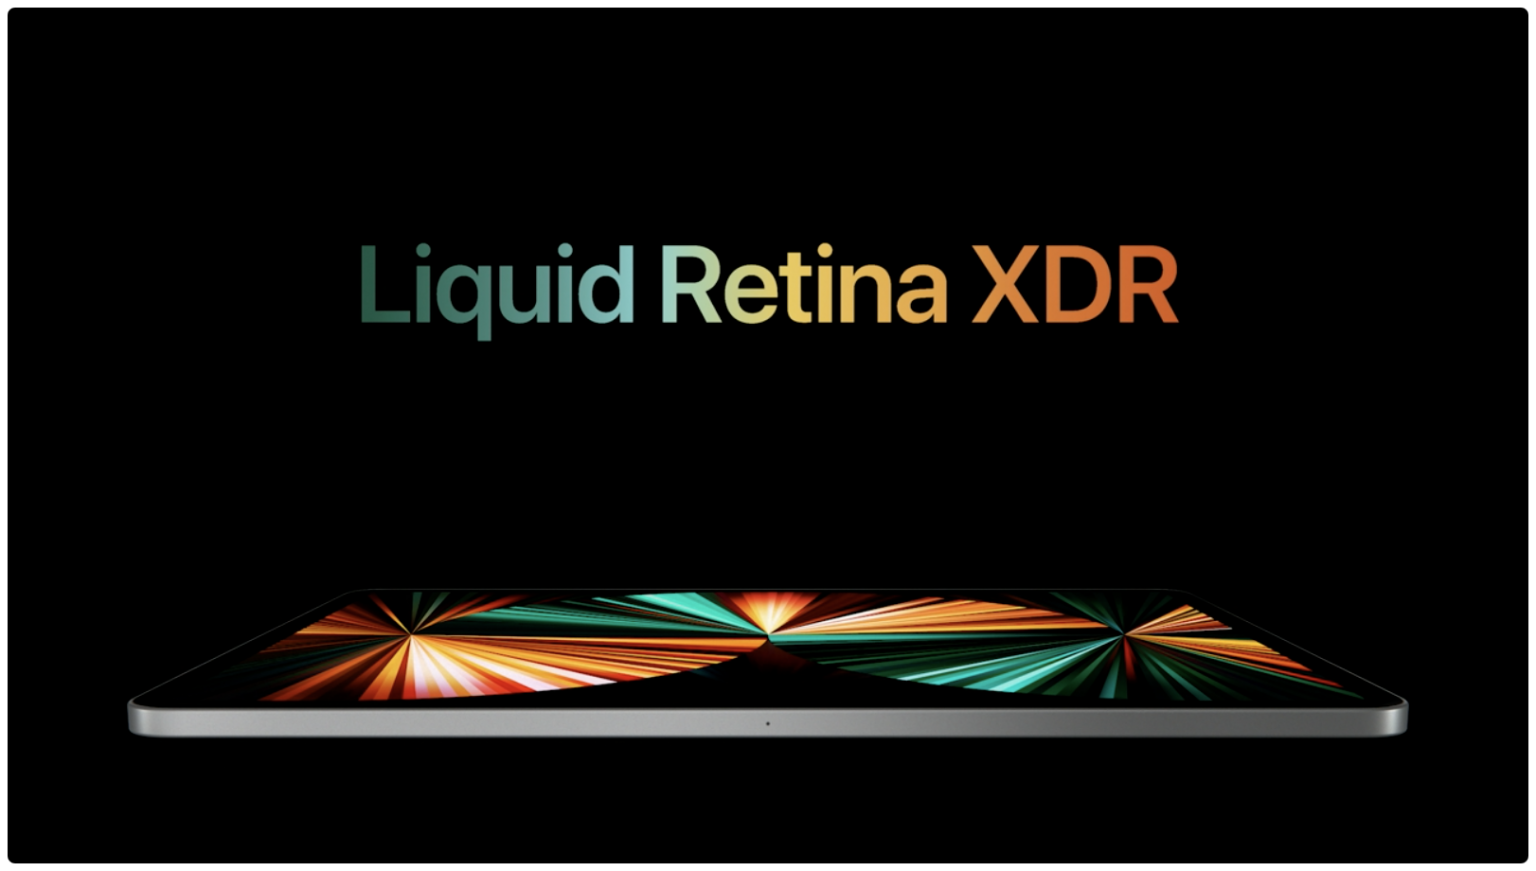 New-iPad-Pro-liquid-retina-xdr-1-1536×871